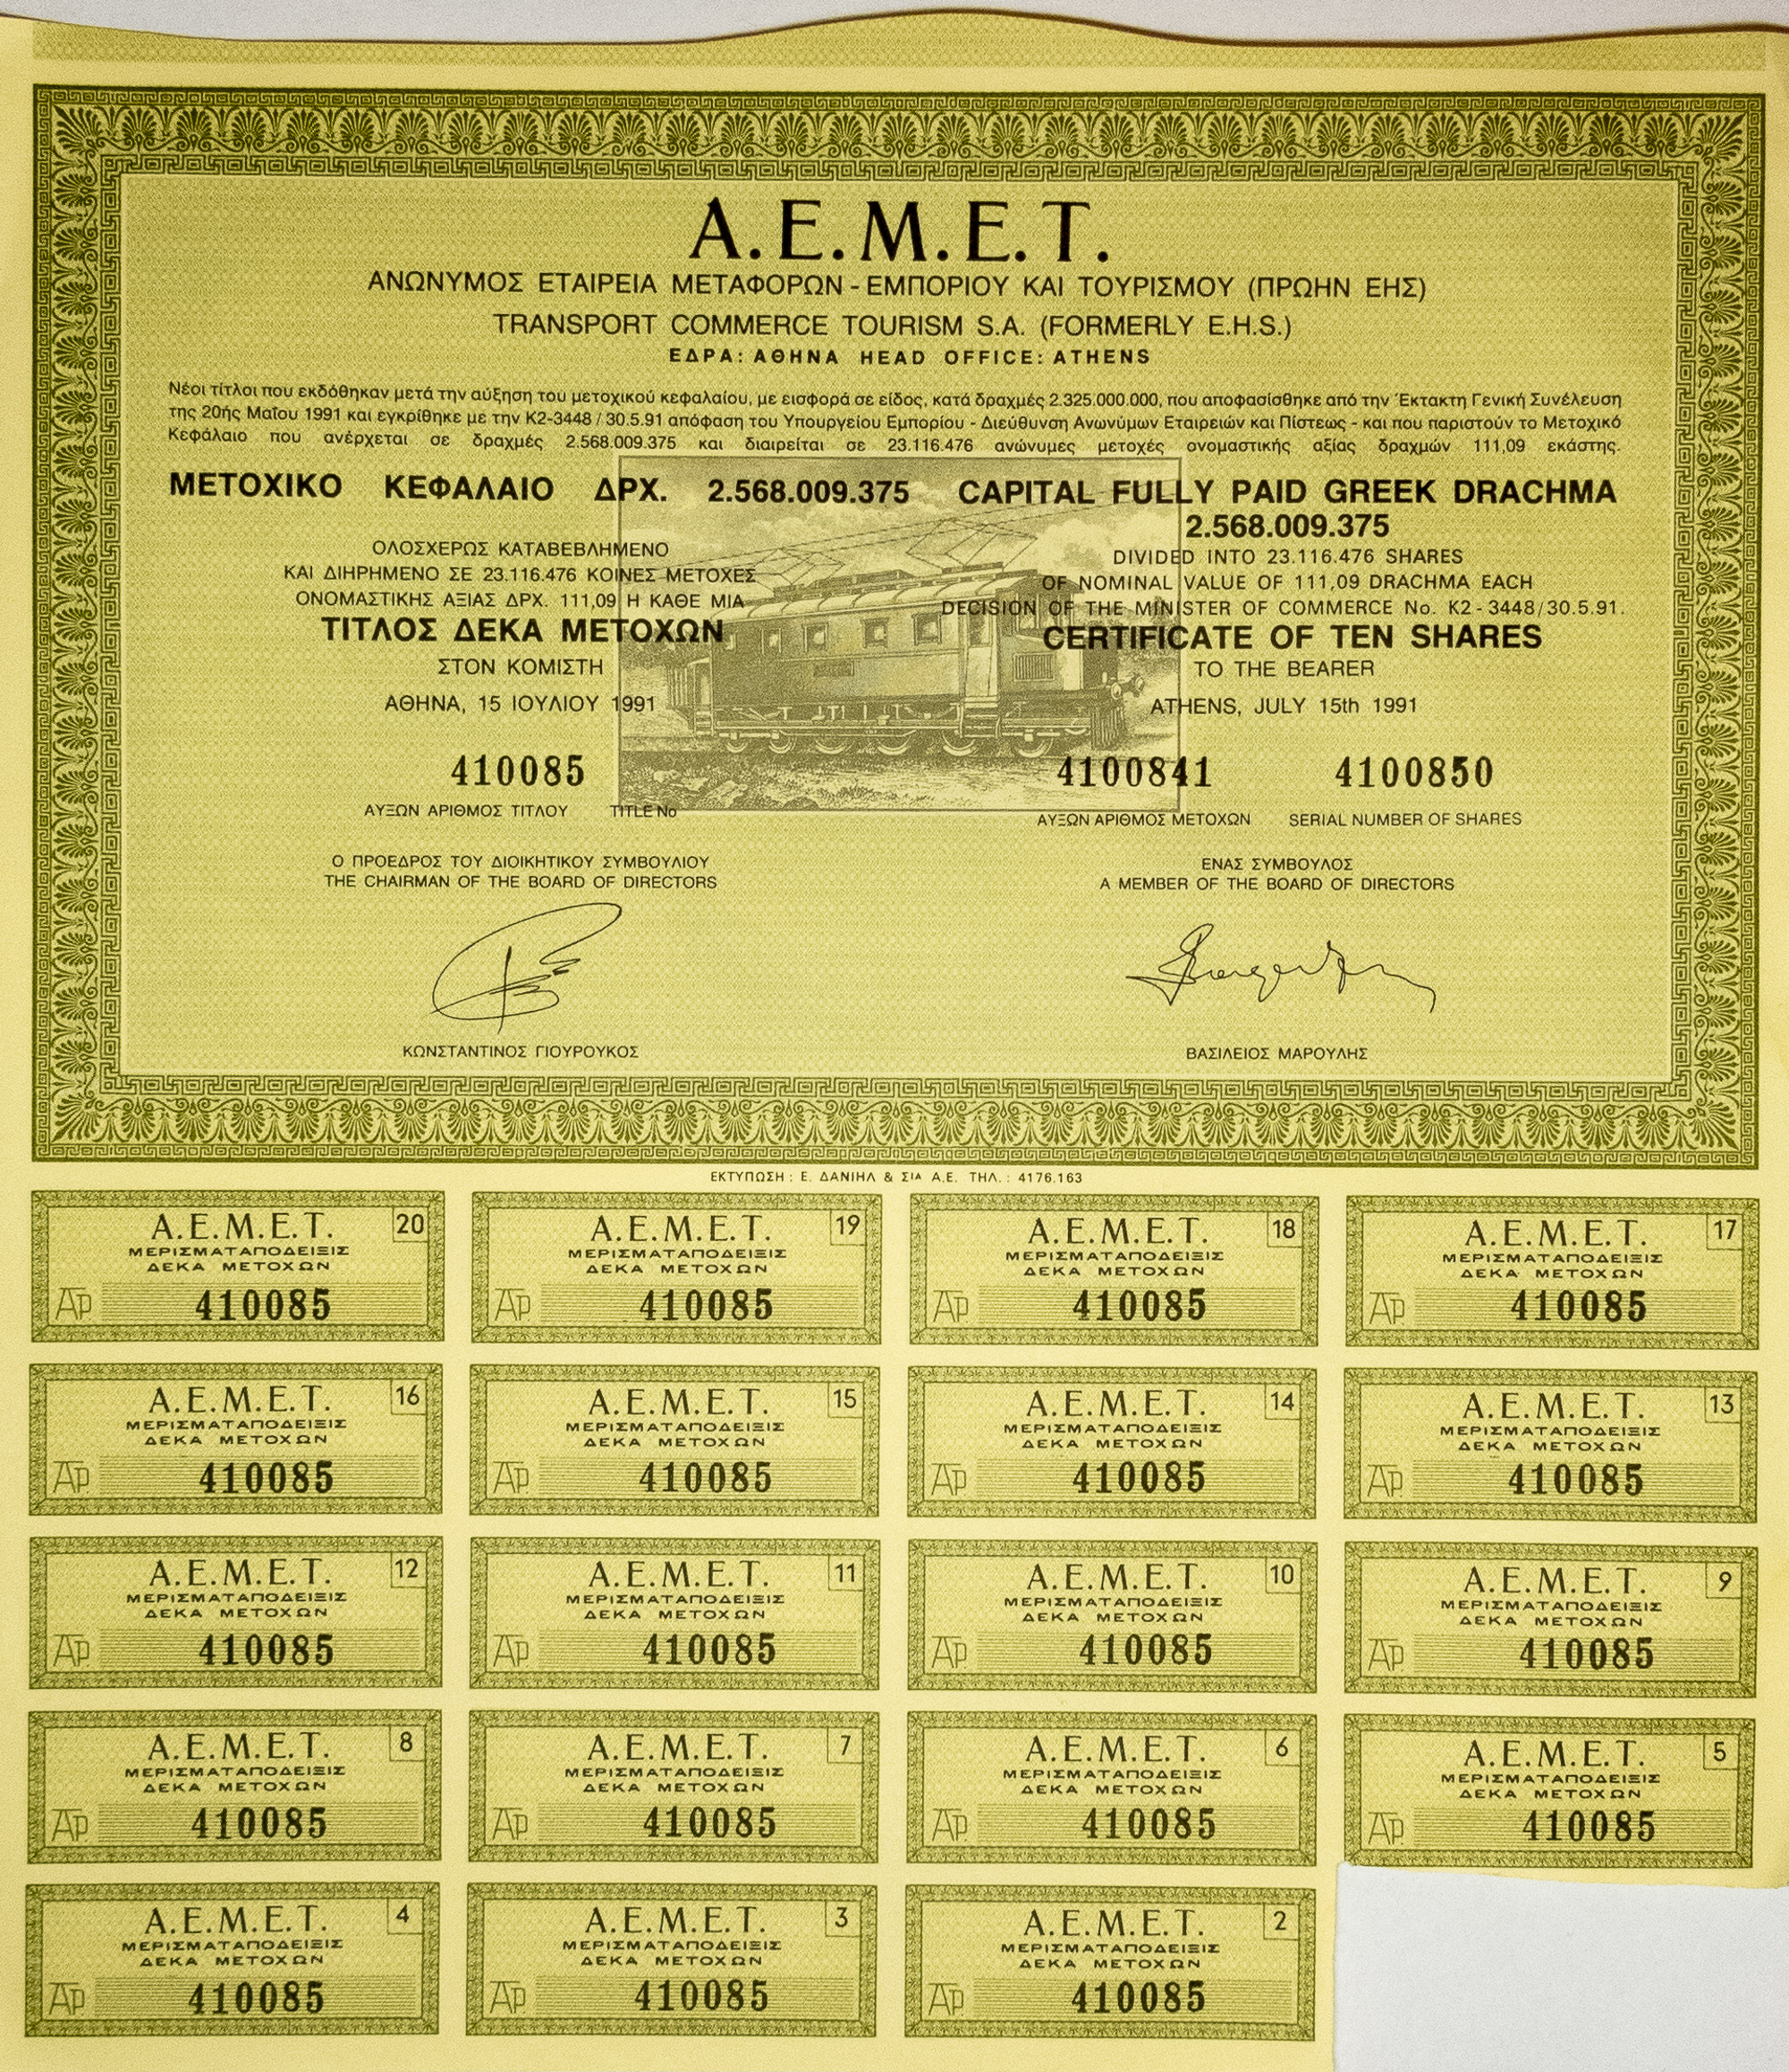 Certificate of ten shares. Greek drachma.